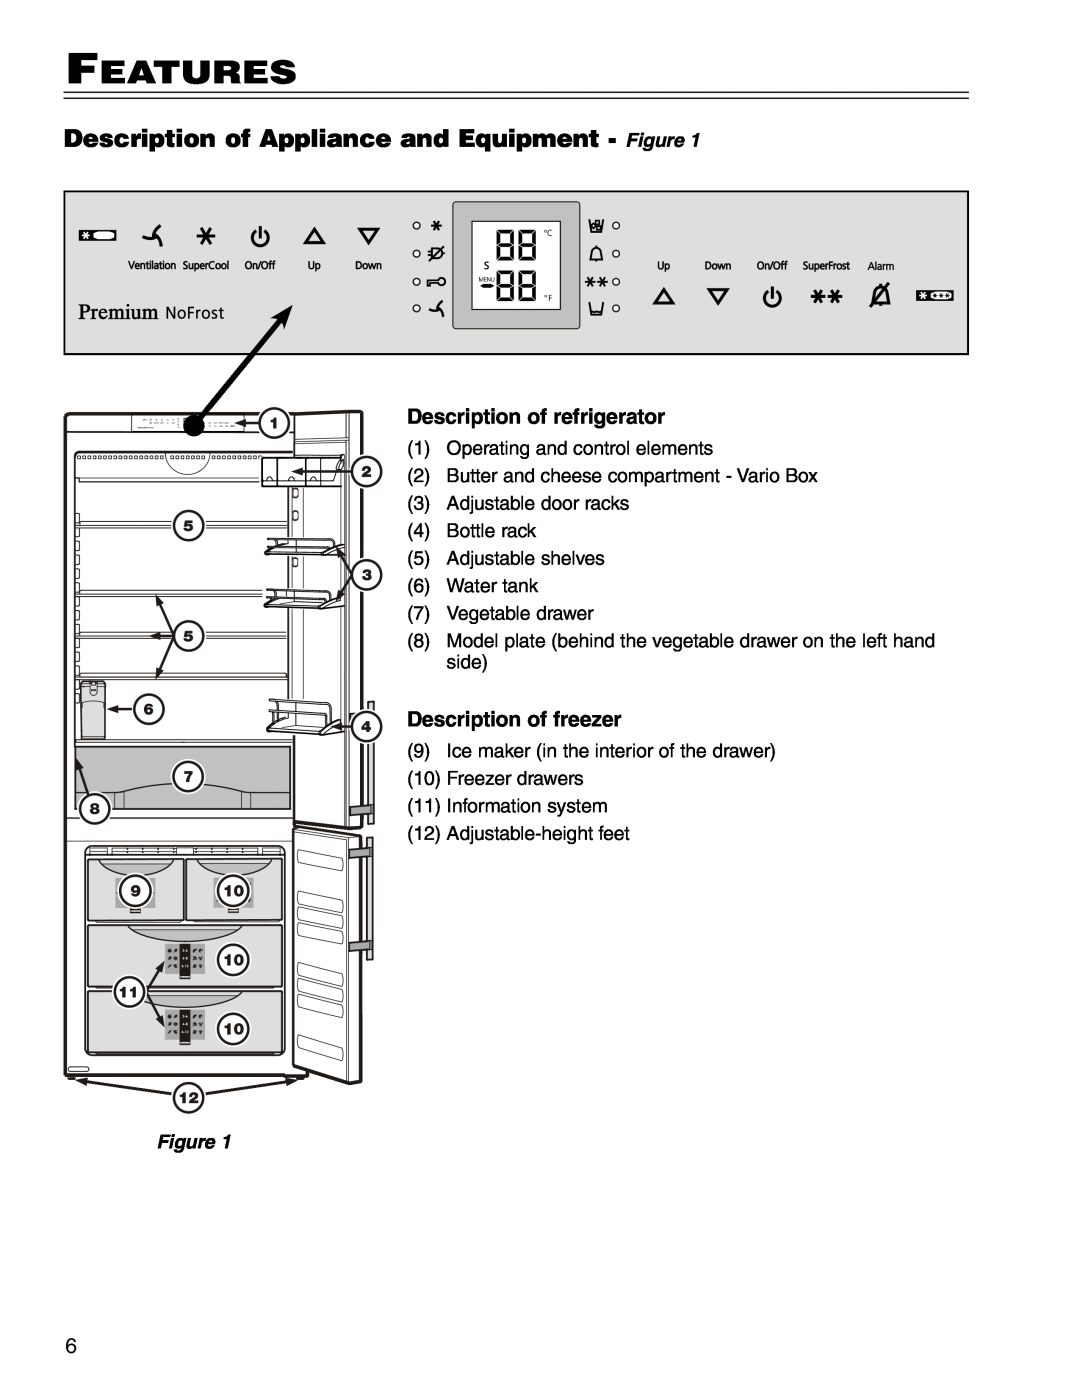 Liebherr CS 1640 7082 481-01 manual Features, Description of Appliance and Equipment - Figure, Description of refrigerator 